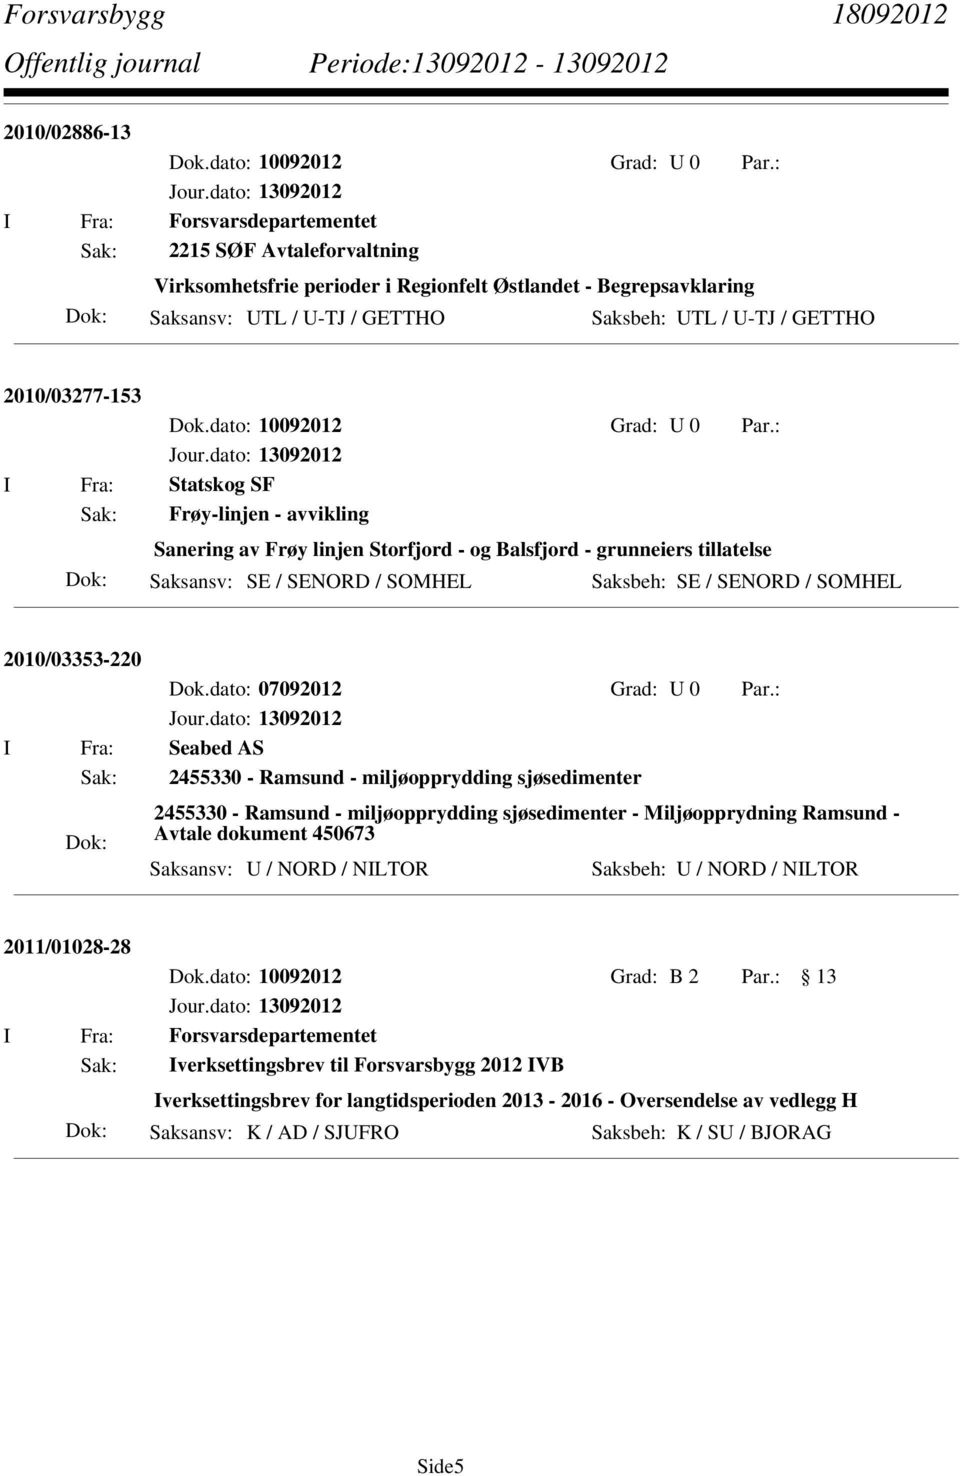 Seabed AS Sak: 2455330 - Ramsund - miljøopprydding sjøsedimenter 2455330 - Ramsund - miljøopprydding sjøsedimenter - Miljøopprydning Ramsund - Avtale dokument 450673 Saksansv: U / NORD / NILTOR